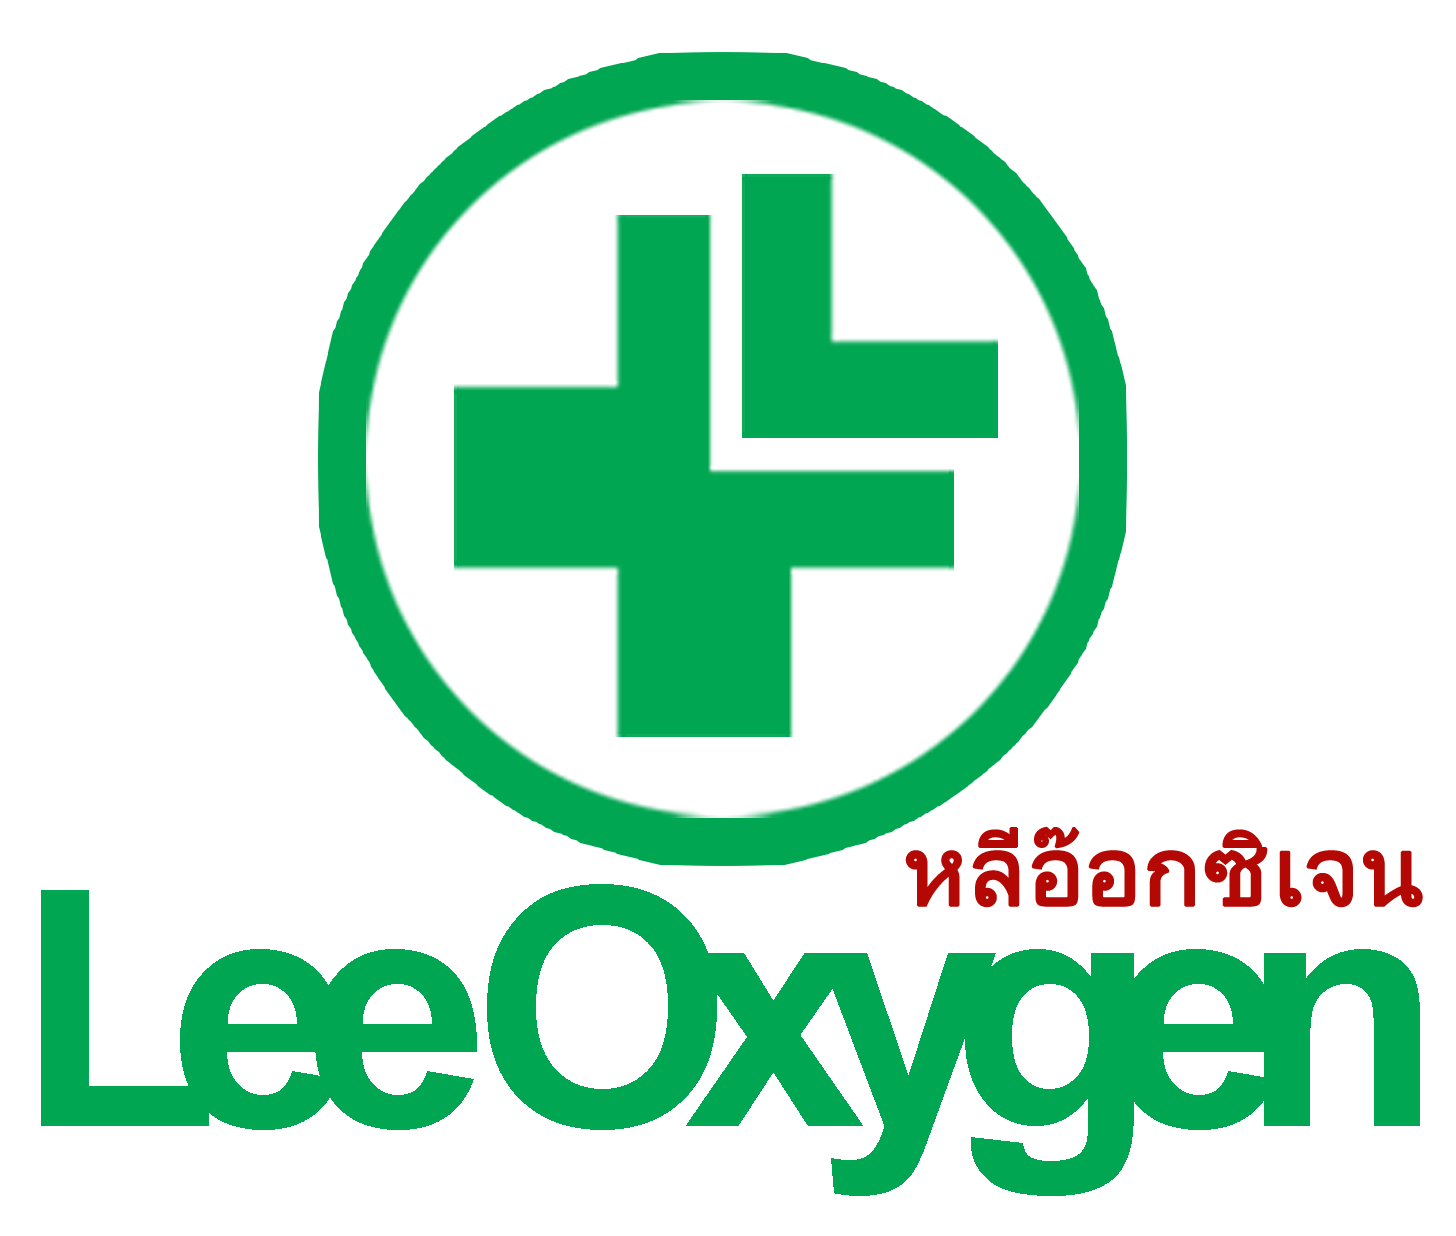 Lee Oxygen